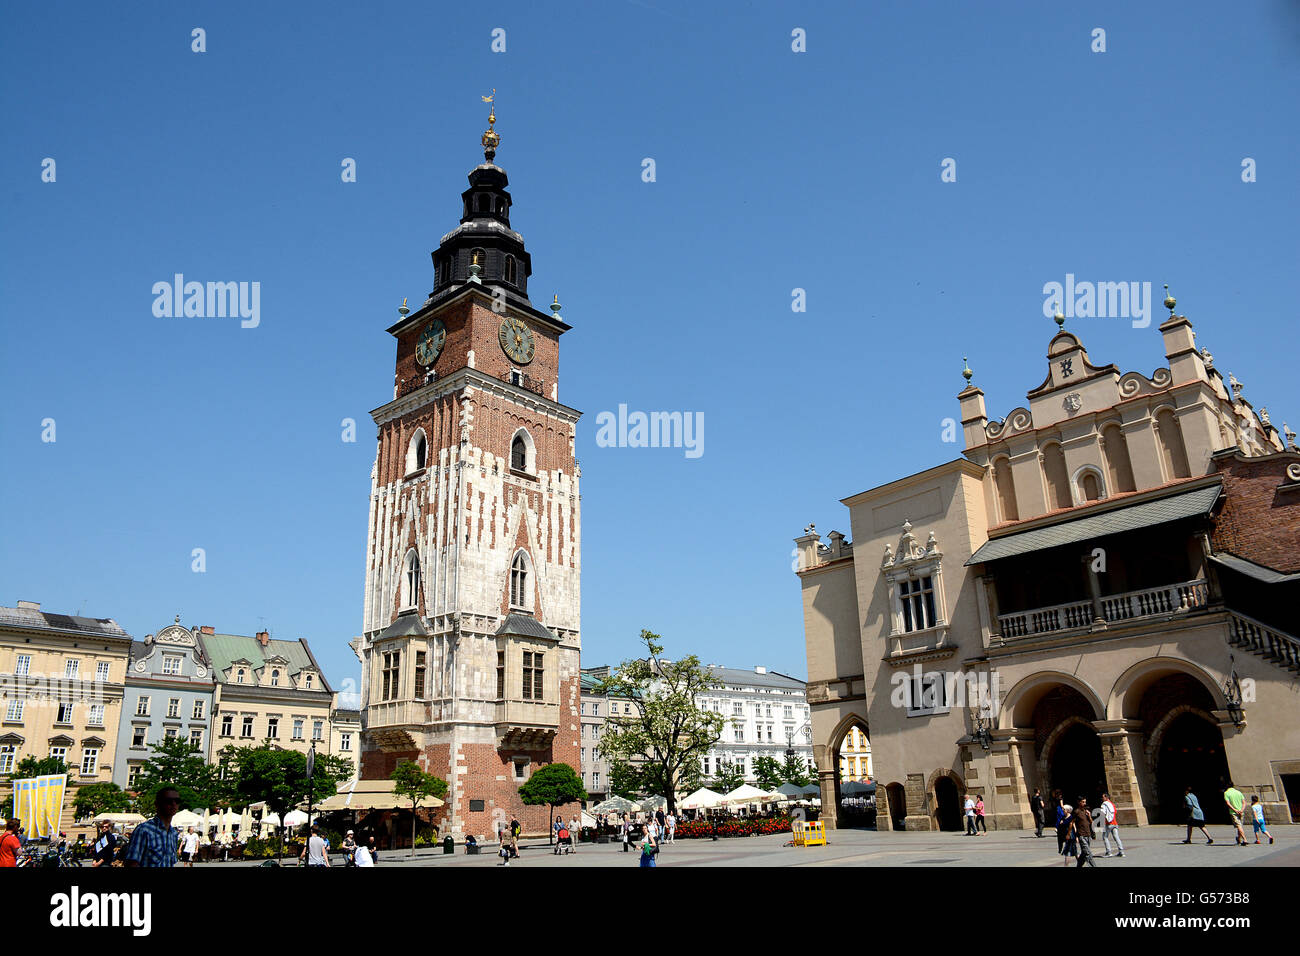 rynek glowny main market square town hall tower Krakow Poland Stock Photo